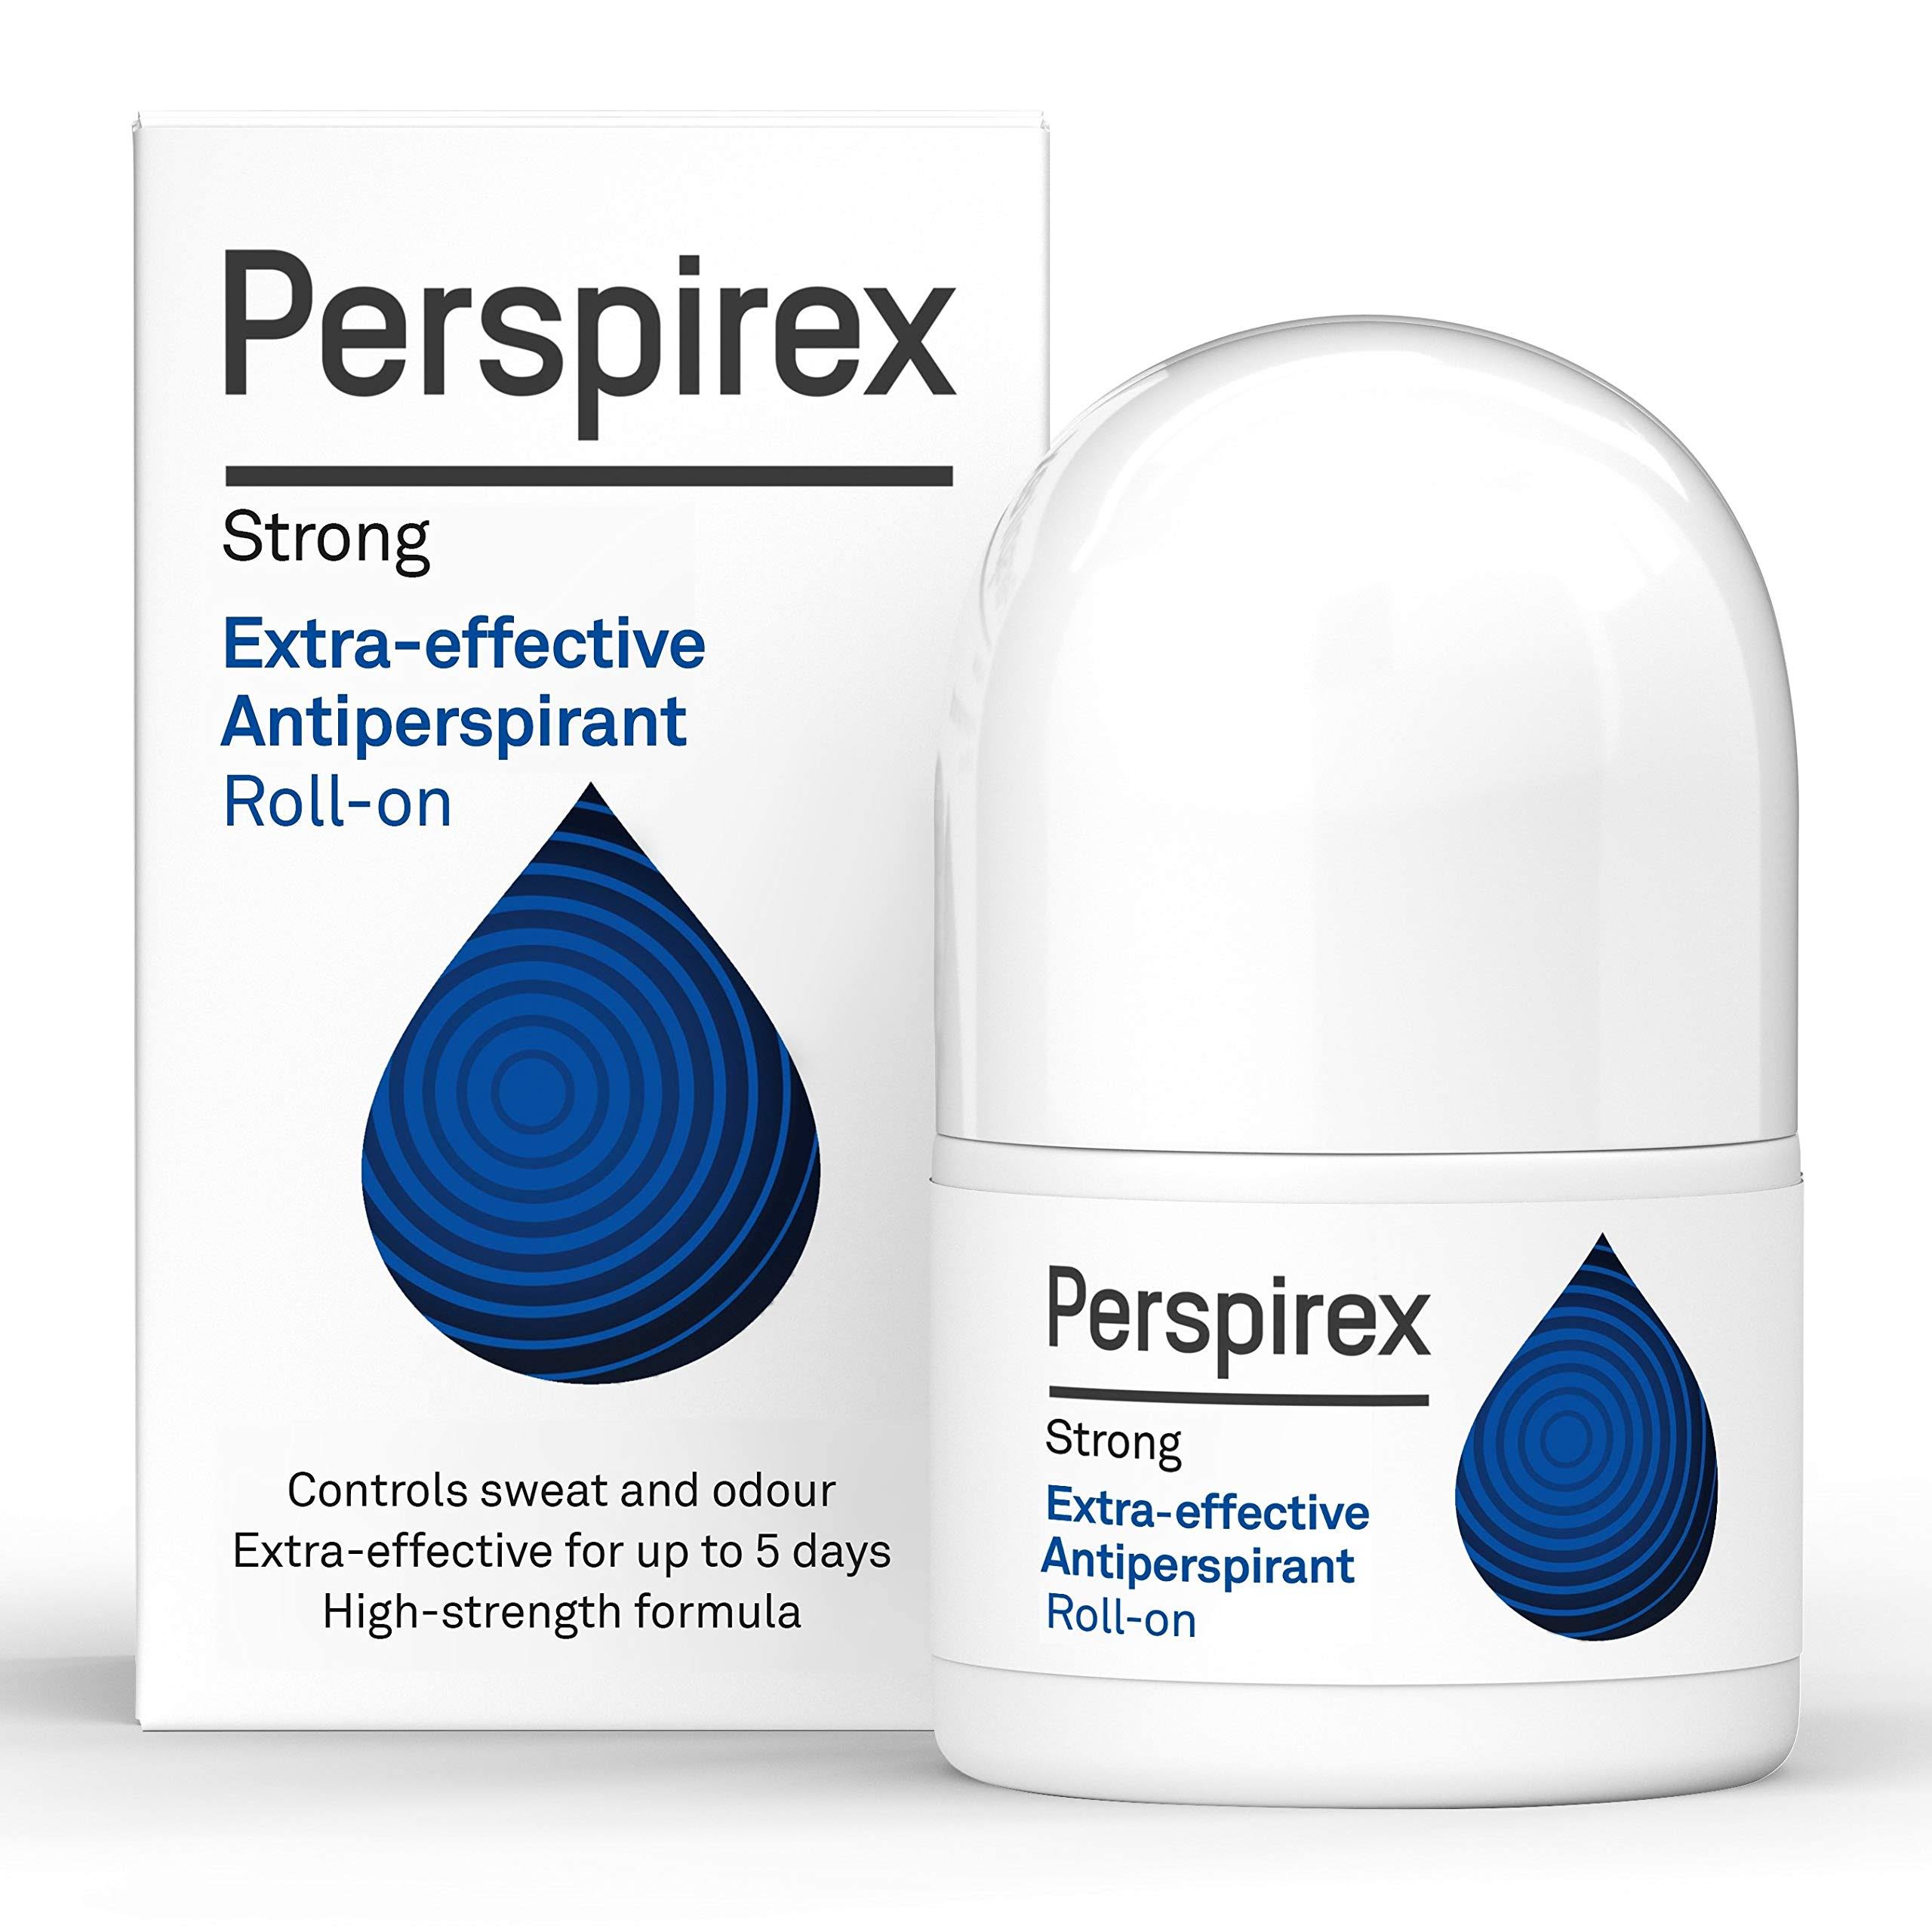 Perspirex Antiperspirant Roll on 20ml - Strong